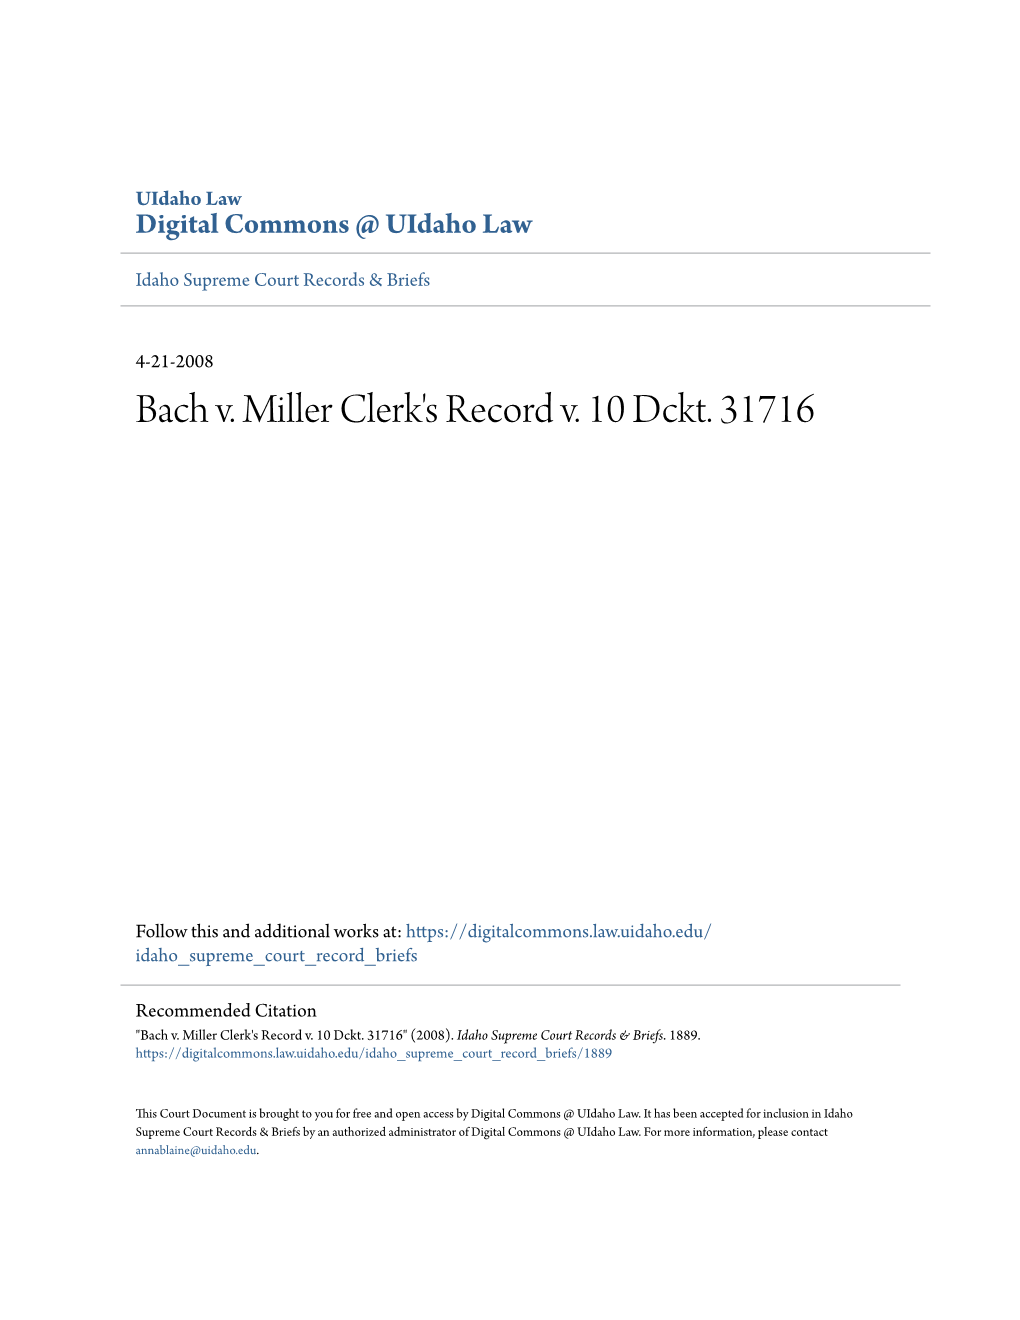 Bach V. Miller Clerk's Record V. 10 Dckt. 31716